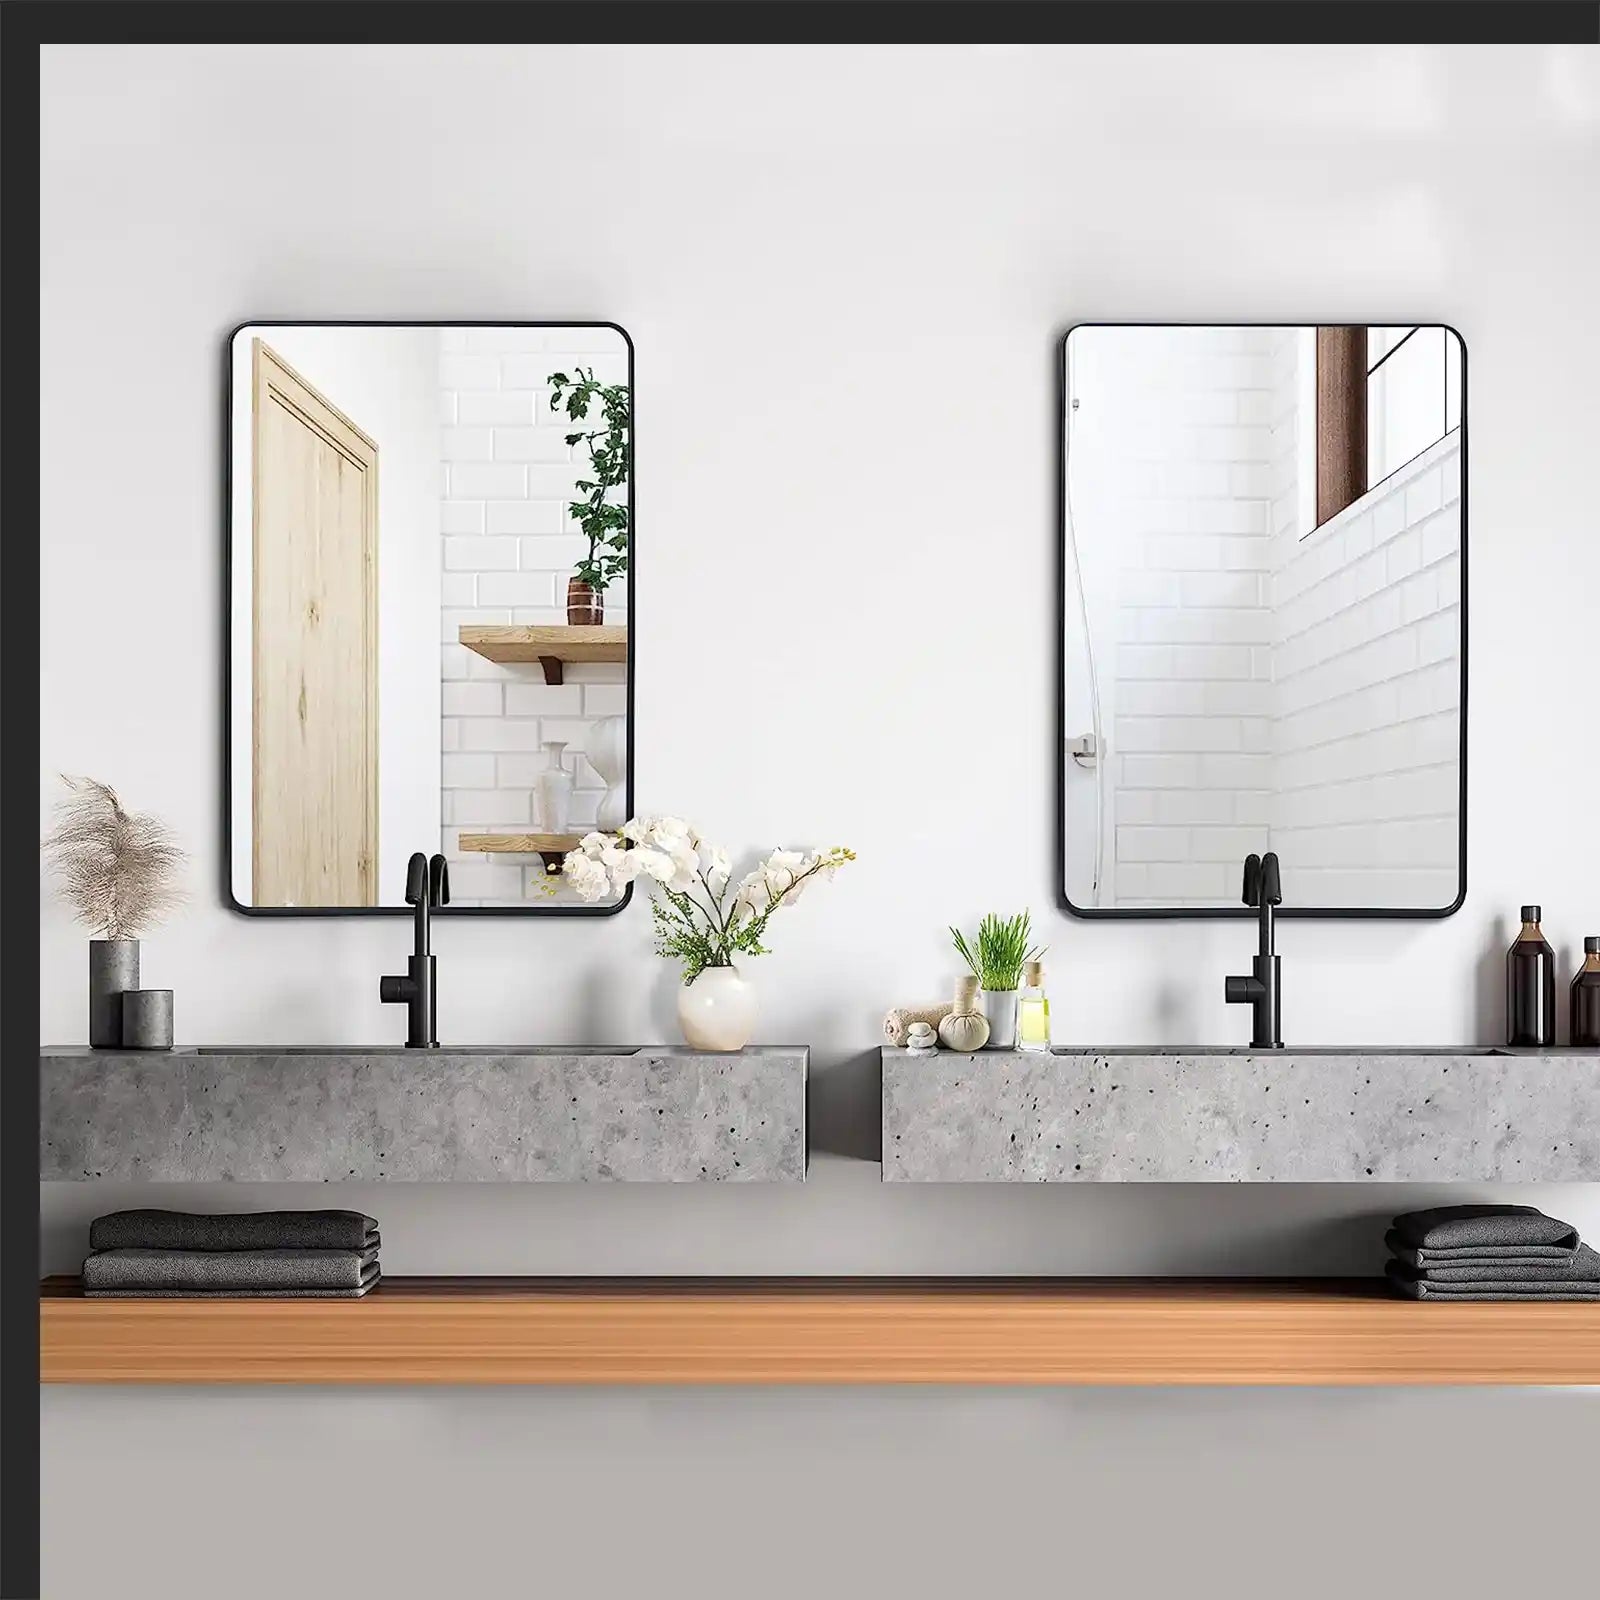 Black Metal Framed Rectangular Wall Mirror, Bathroom Mirror with Peaked Trim for Entryways, Living Rooms, Bathrooms(Set of 2)